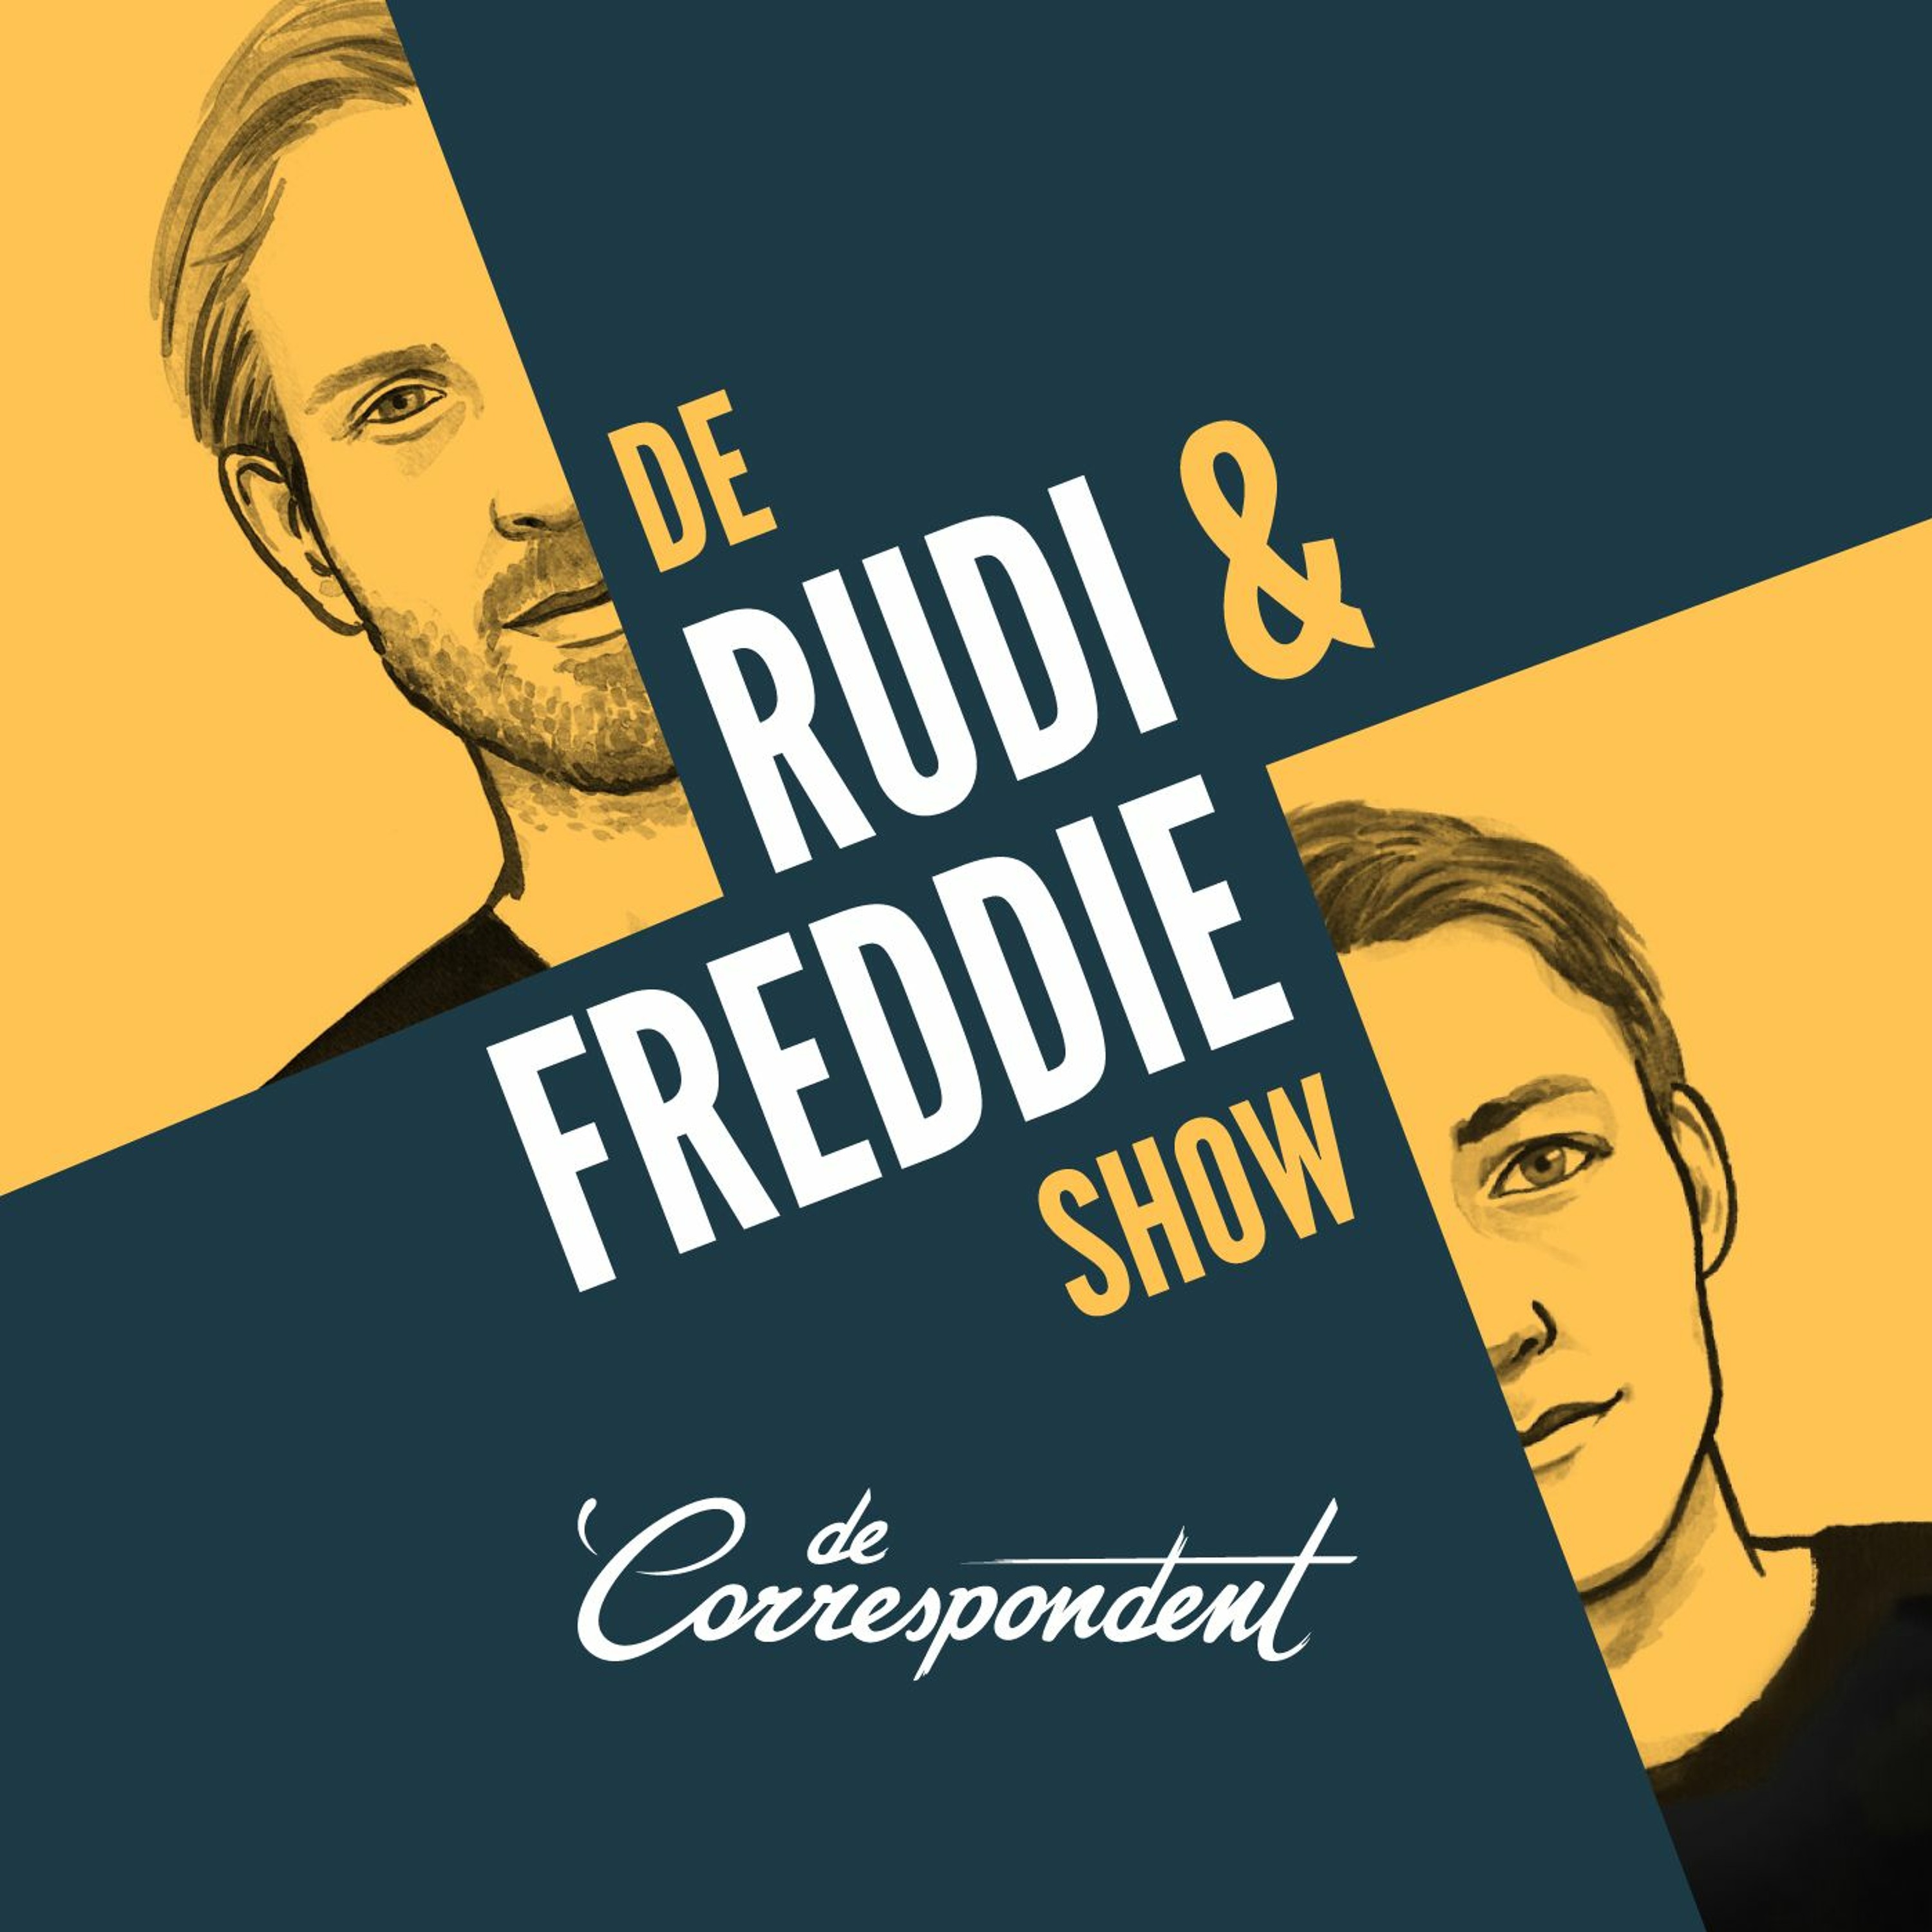 De Rudi versus Freddie Show